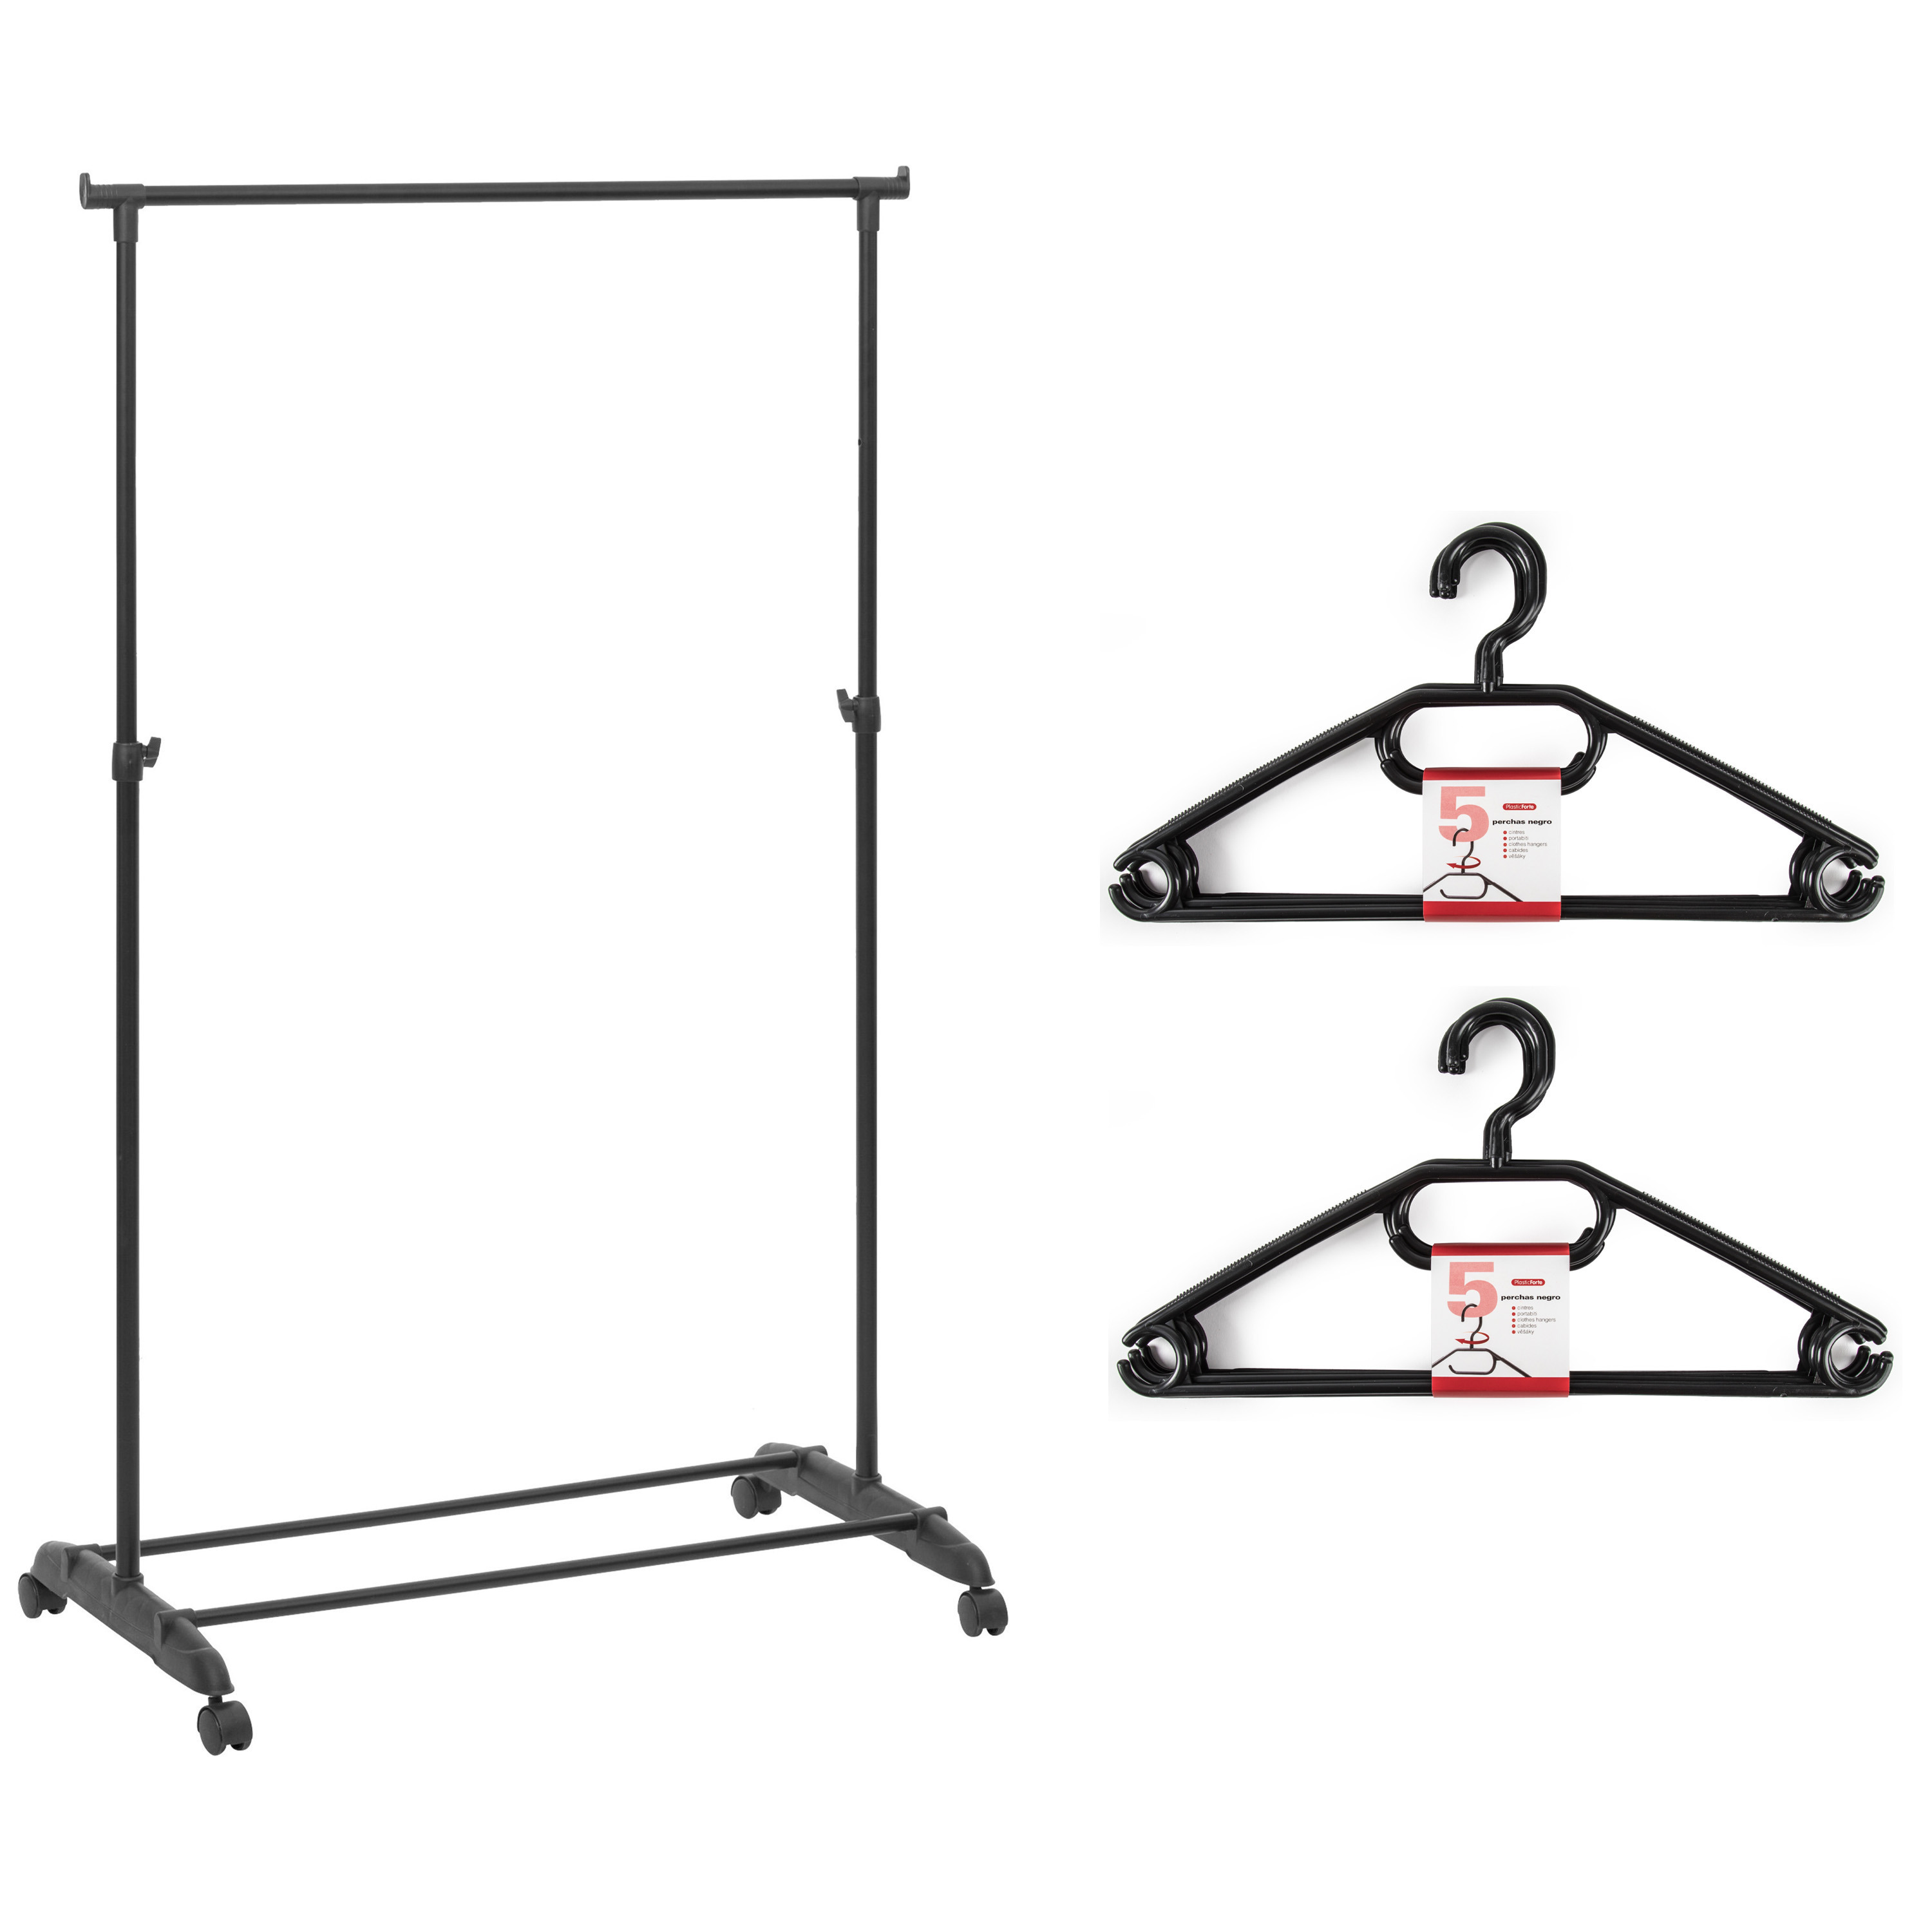 Kledingrek met kleding hangers enkele stang kunststof-metaal zwart 80 x 42 x 160 cm